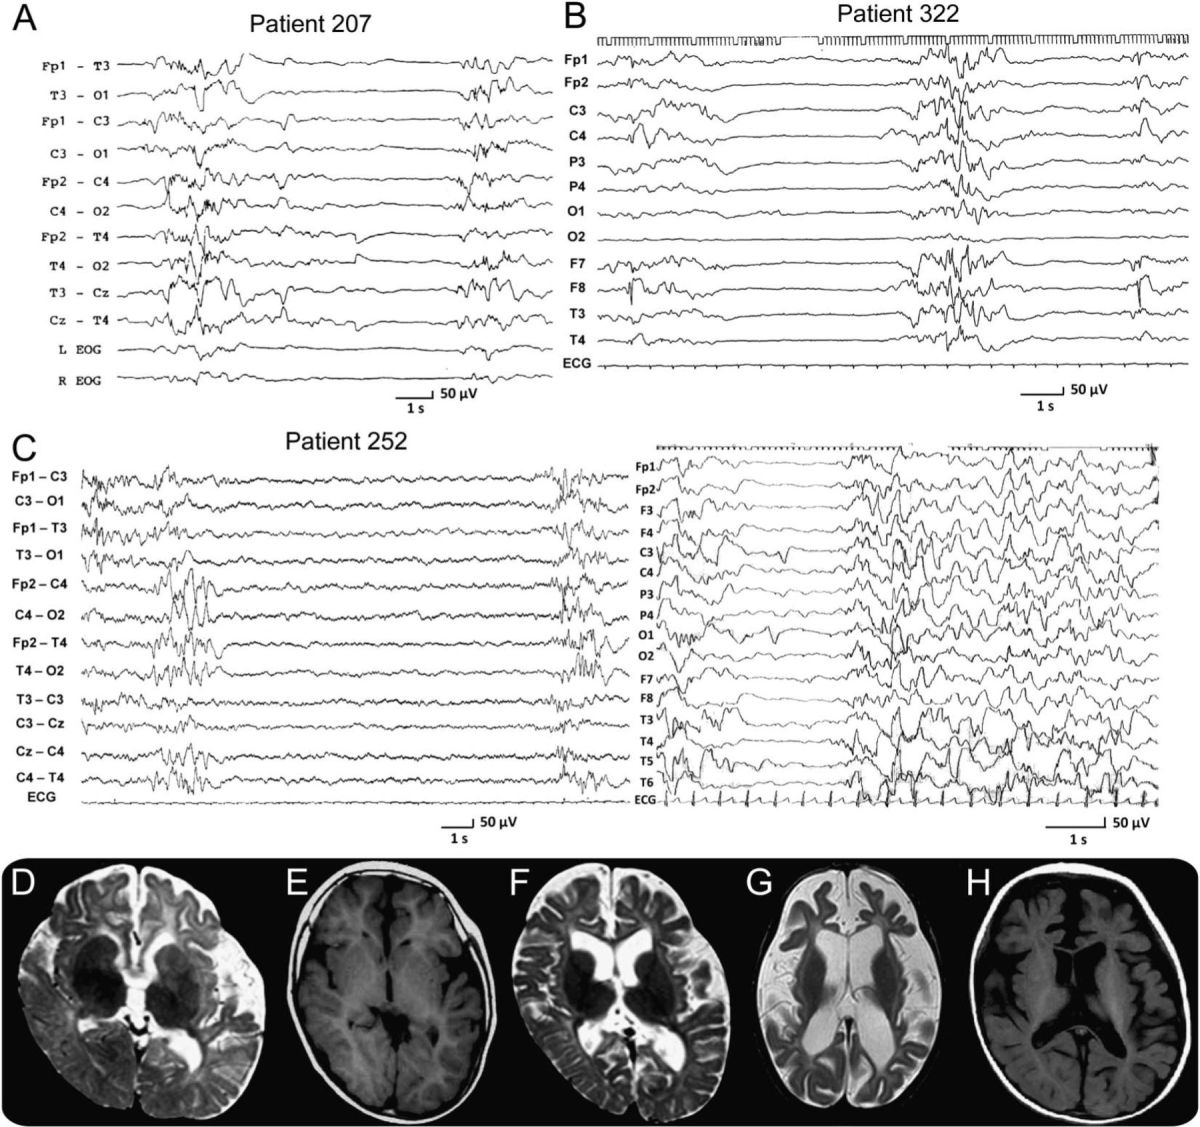 Abnormal EEG's showing spike-wave pattern